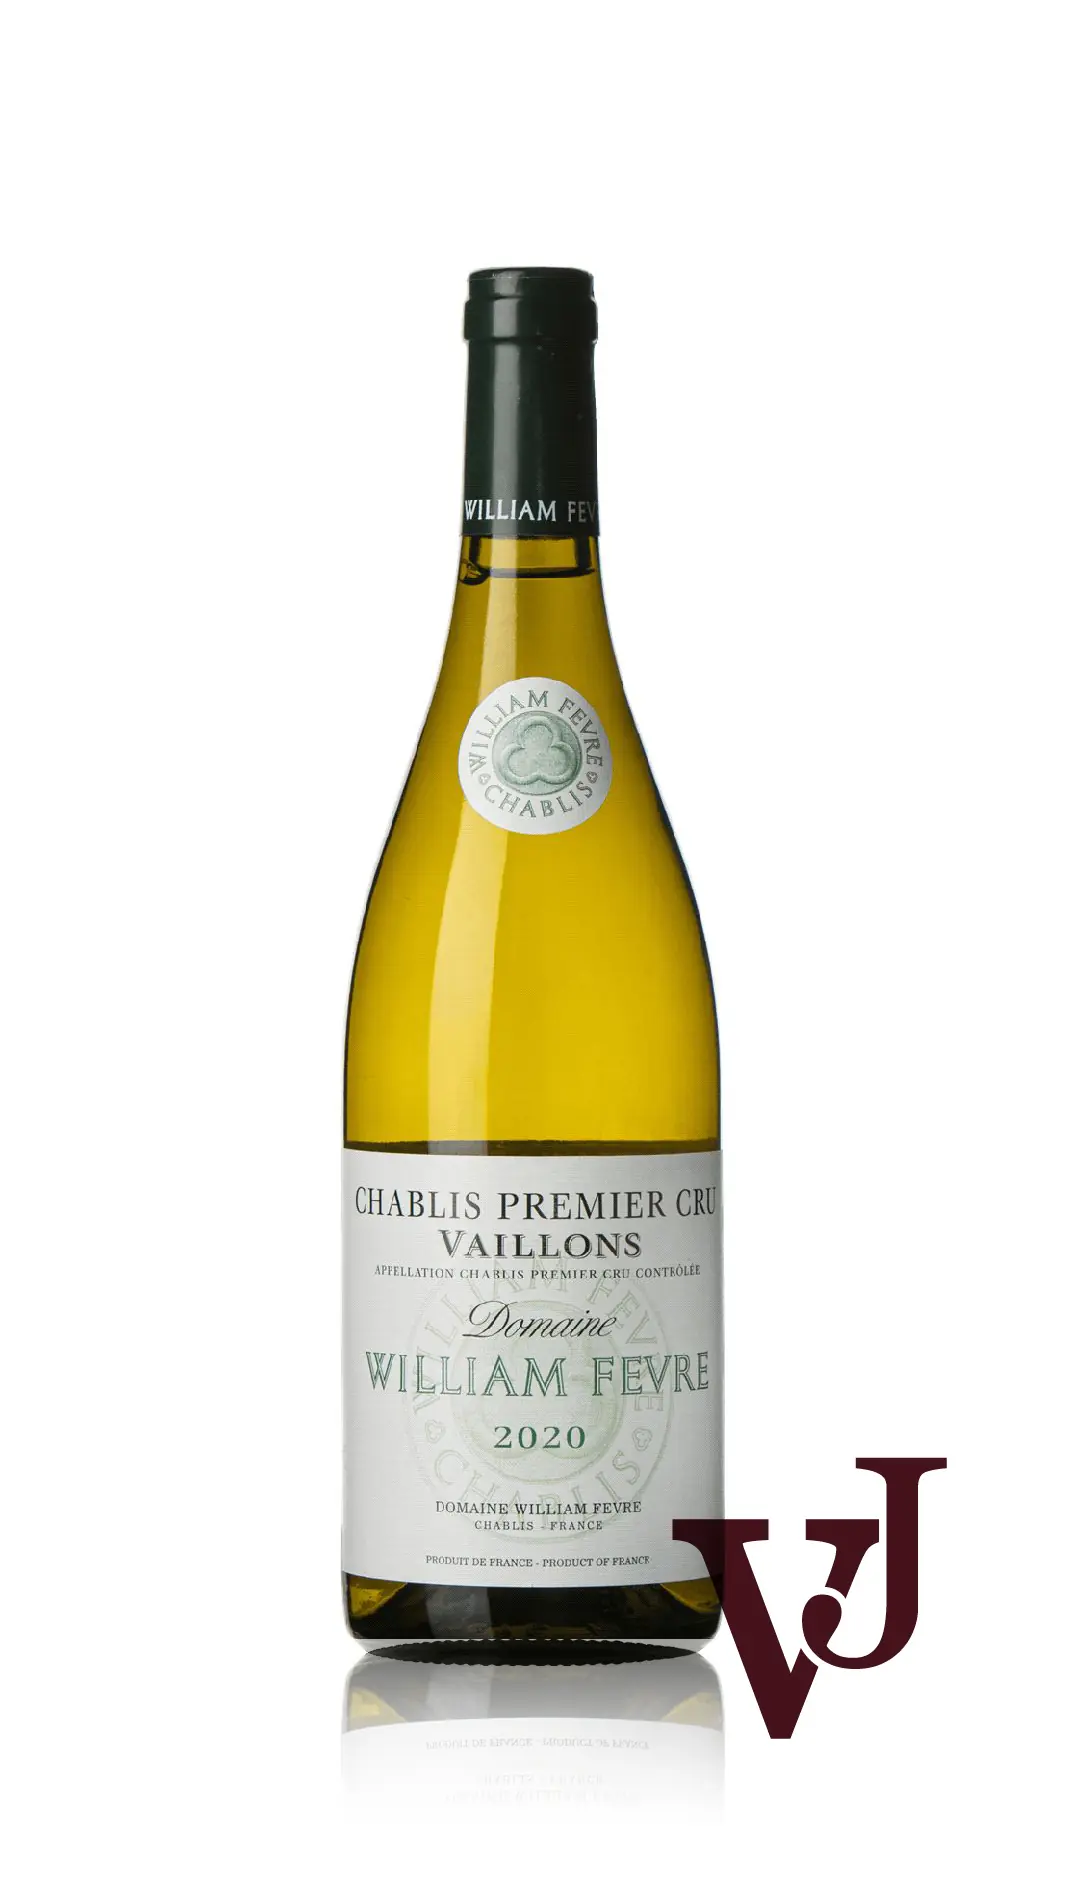 Vitt Vin - Chablis 1er Cru Vaillons William Fèvre 2020 artikel nummer 9324601 från producenten Domaine William Fèvre från området Frankrike - Vinjournalen.se